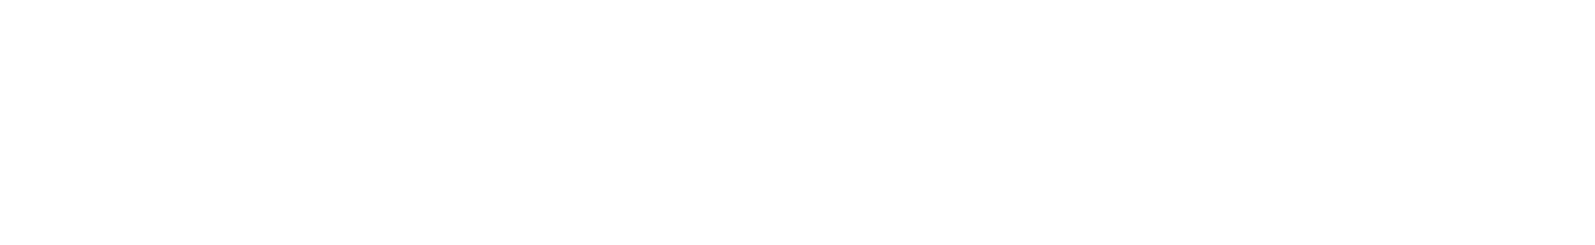 OVH Groupe logo large for dark backgrounds (transparent PNG)